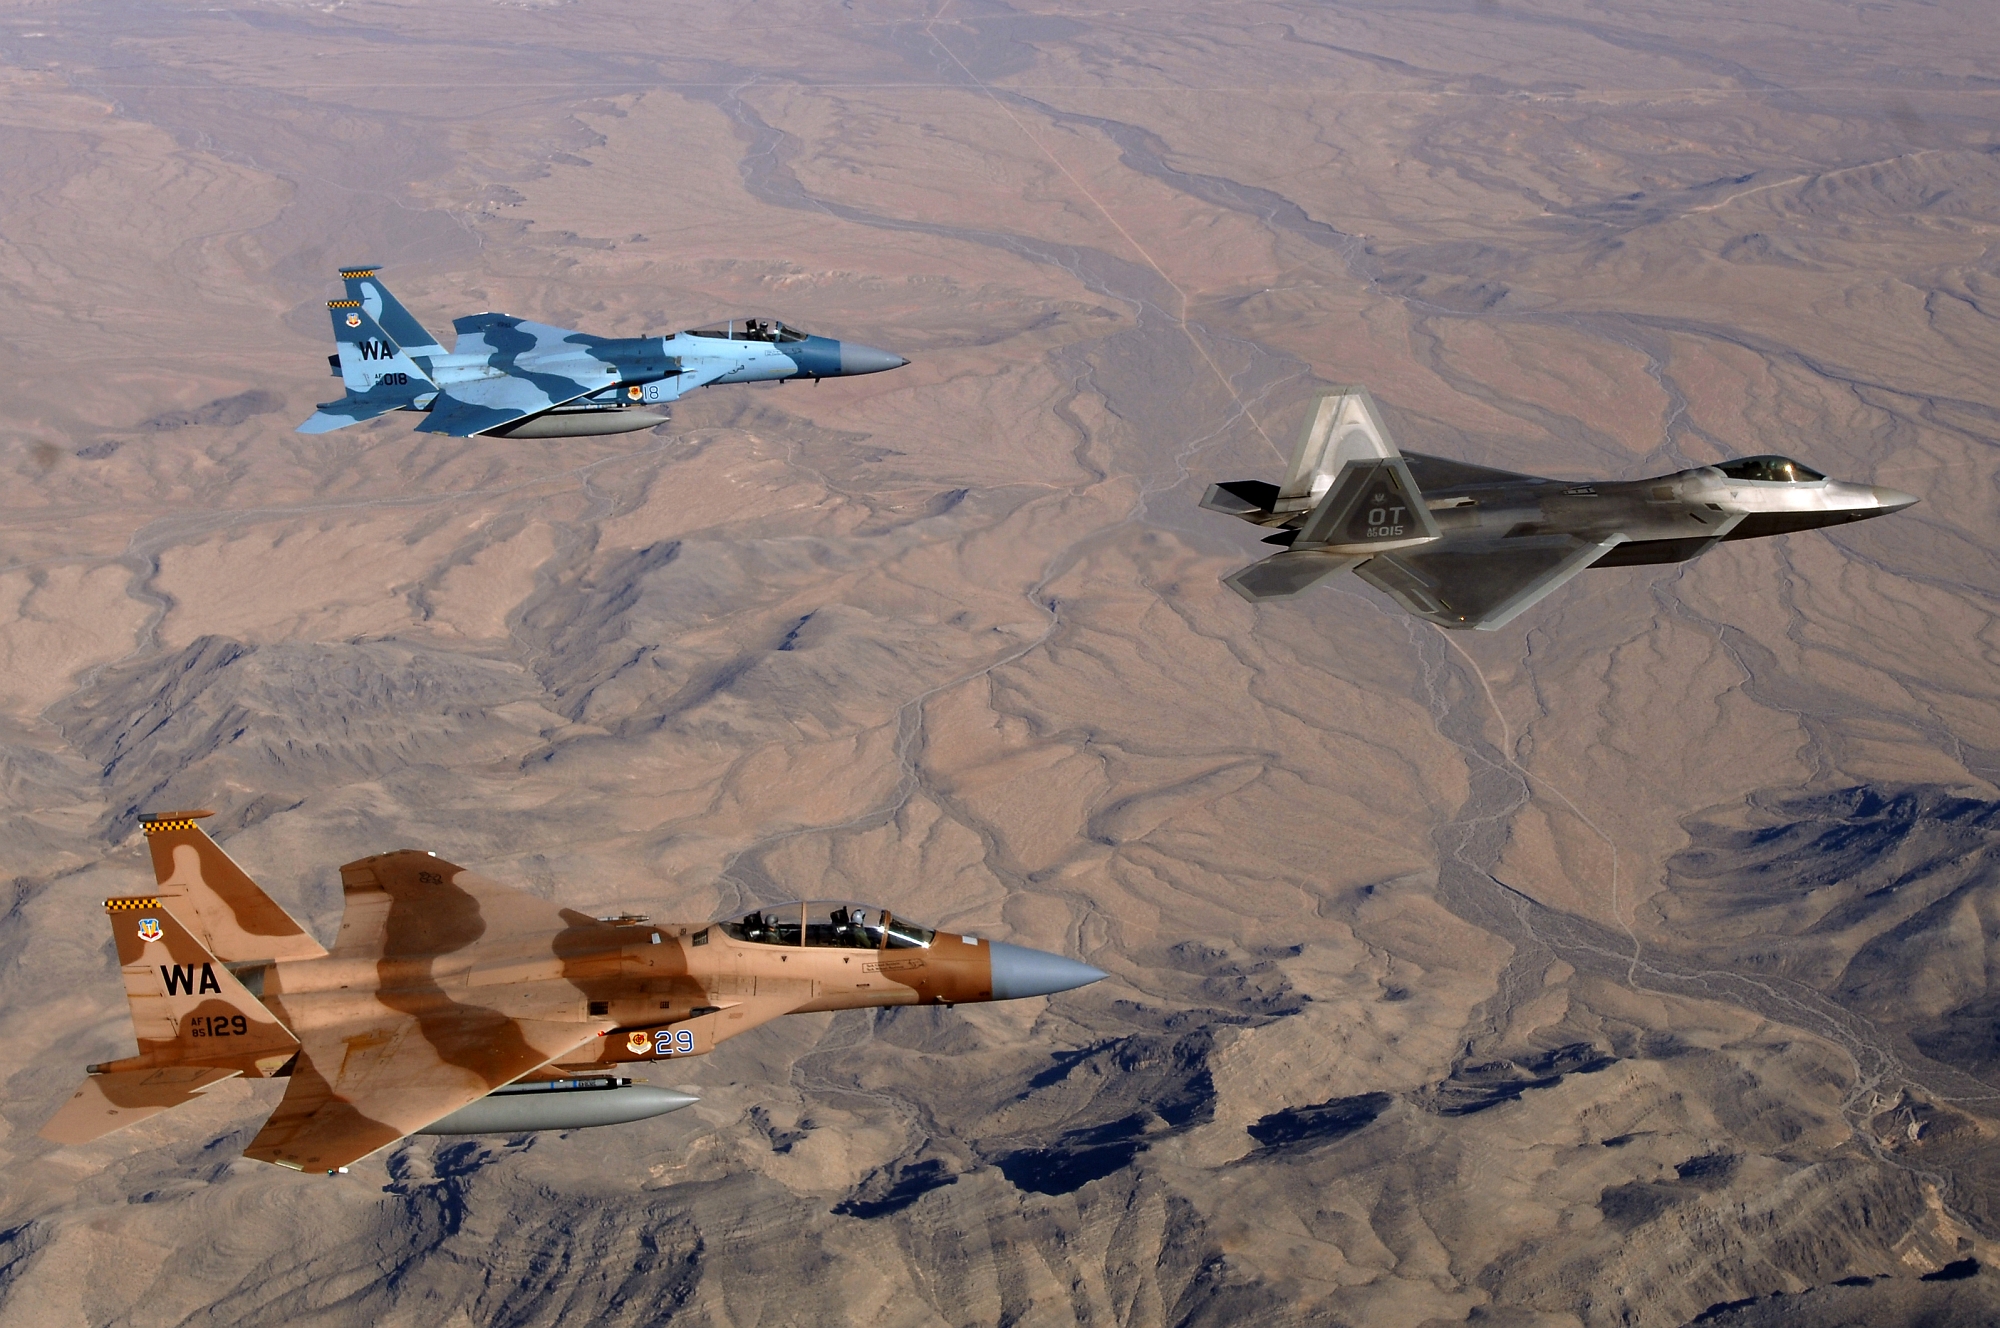 gpw-20050822-UnitedStatesAirForce-080424-F-4884R-020-mountains-F-15-Eagles-and-F-22A-Raptor-stealth-fighter-Nevada-20080424-medium.jpg